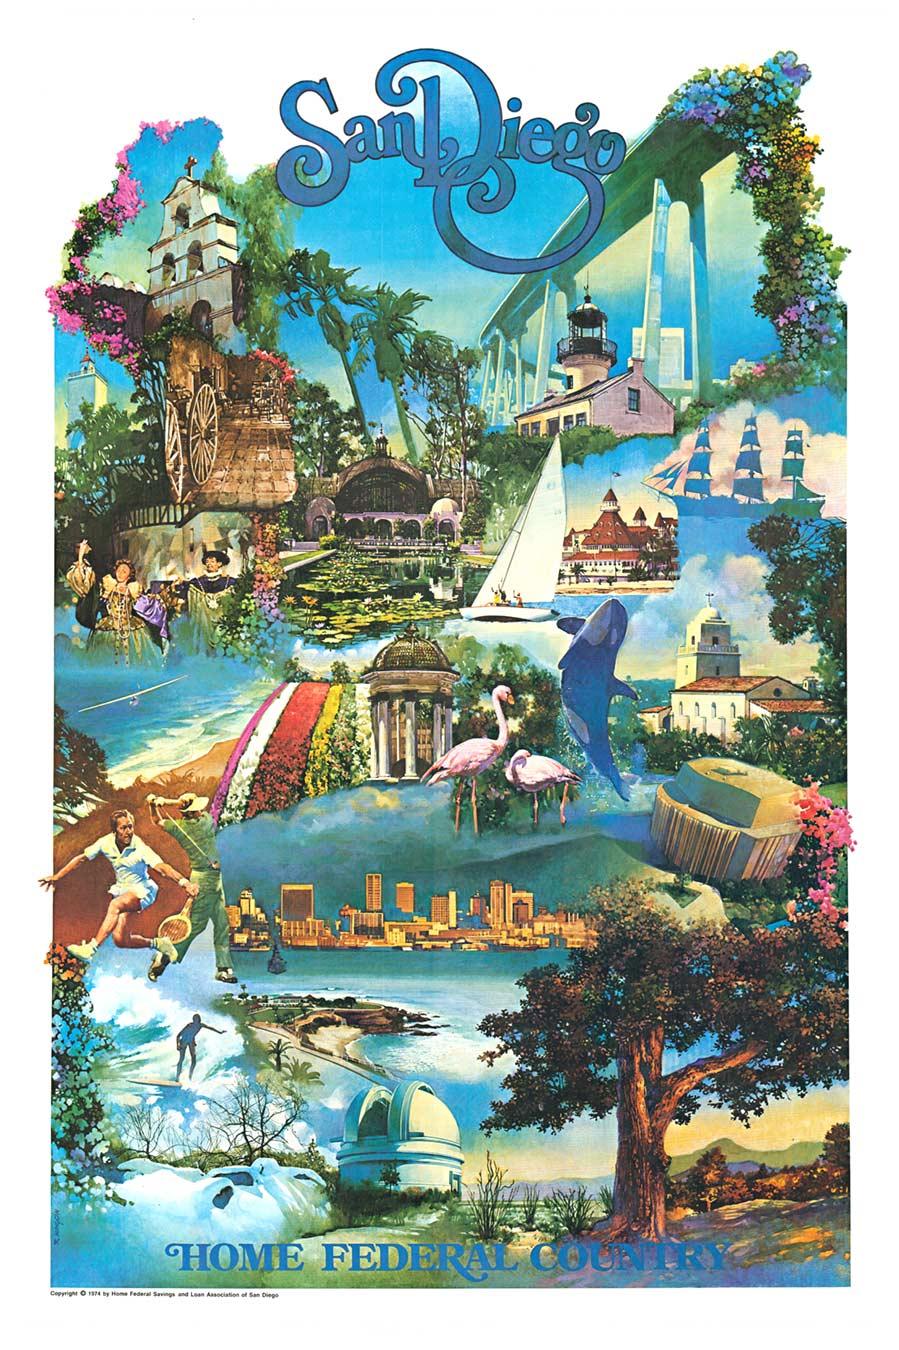 Affiche vintage originale de San Diego (Home Federal) de 1974